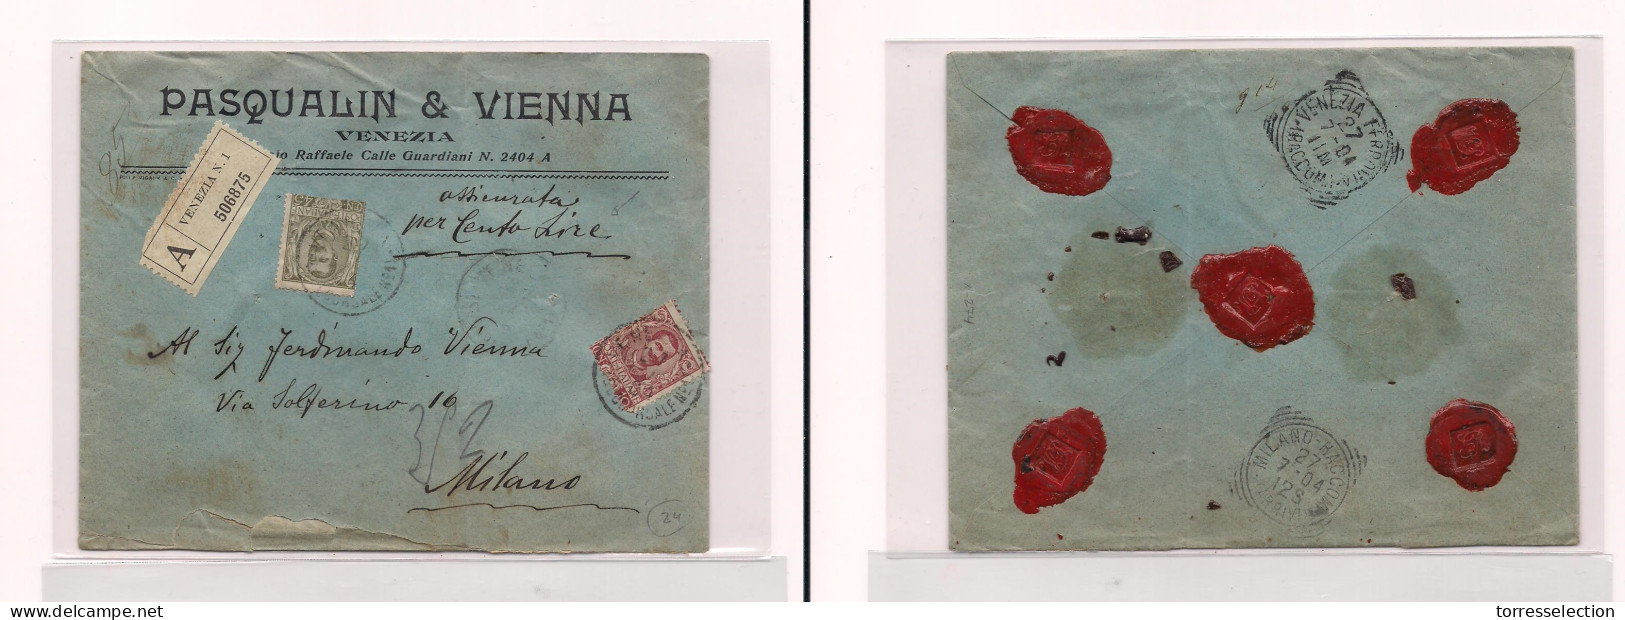 ITALY. Cover -  1904 Venezia To Milano Registr Insured Fkd Env. Nice Item. Easy Deal. XSALE. - Unclassified